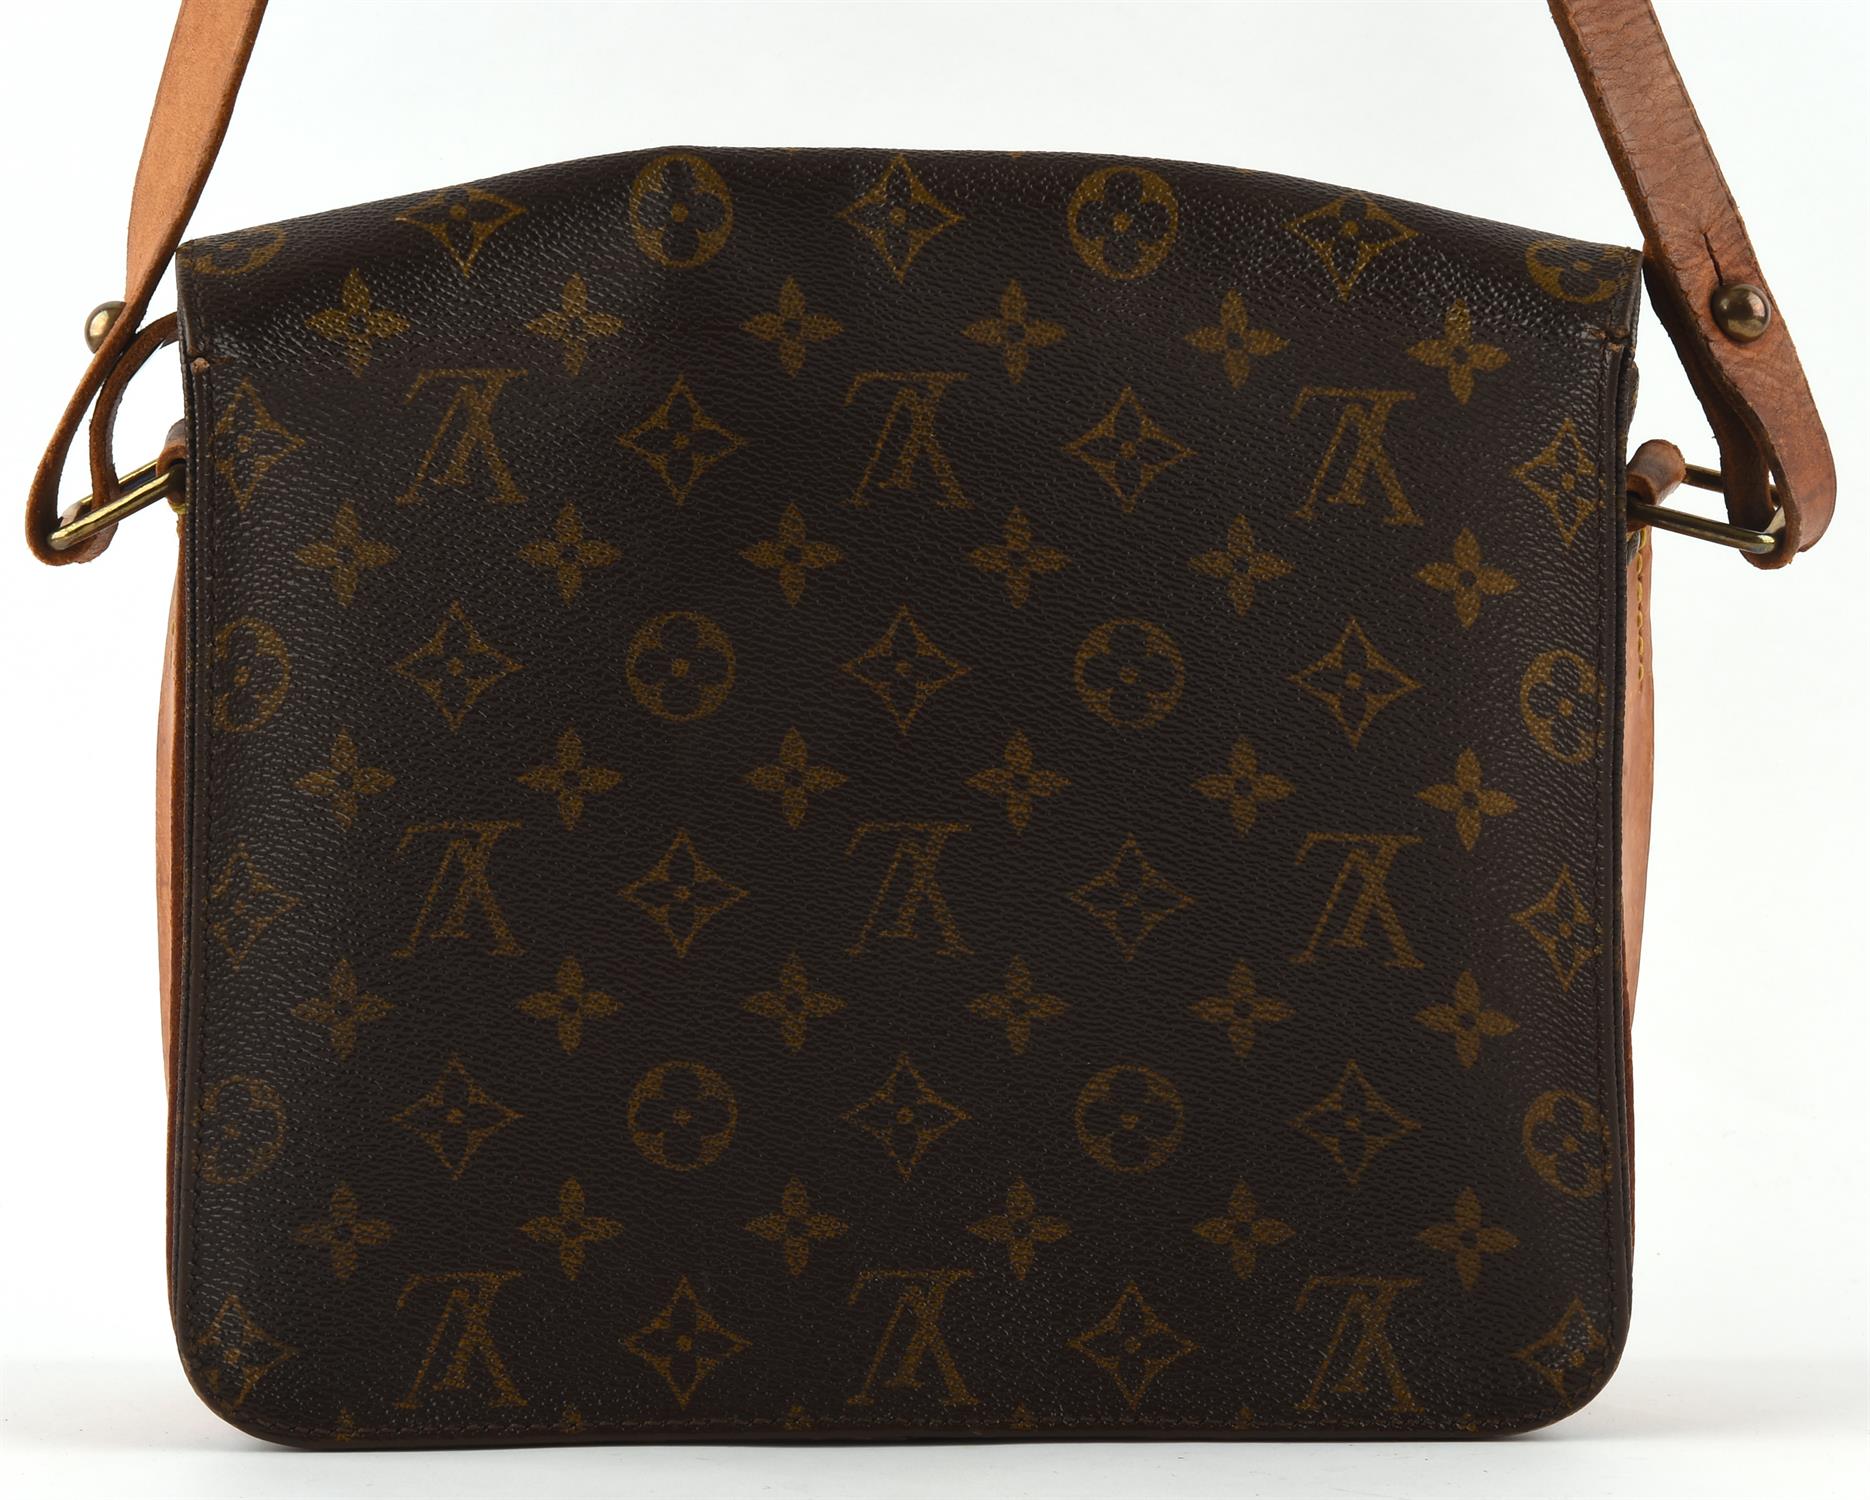 LOUIS VUITTON vintage CARTOUCHIERE canvas coated leather cross-body shoulder handbag - Image 5 of 6